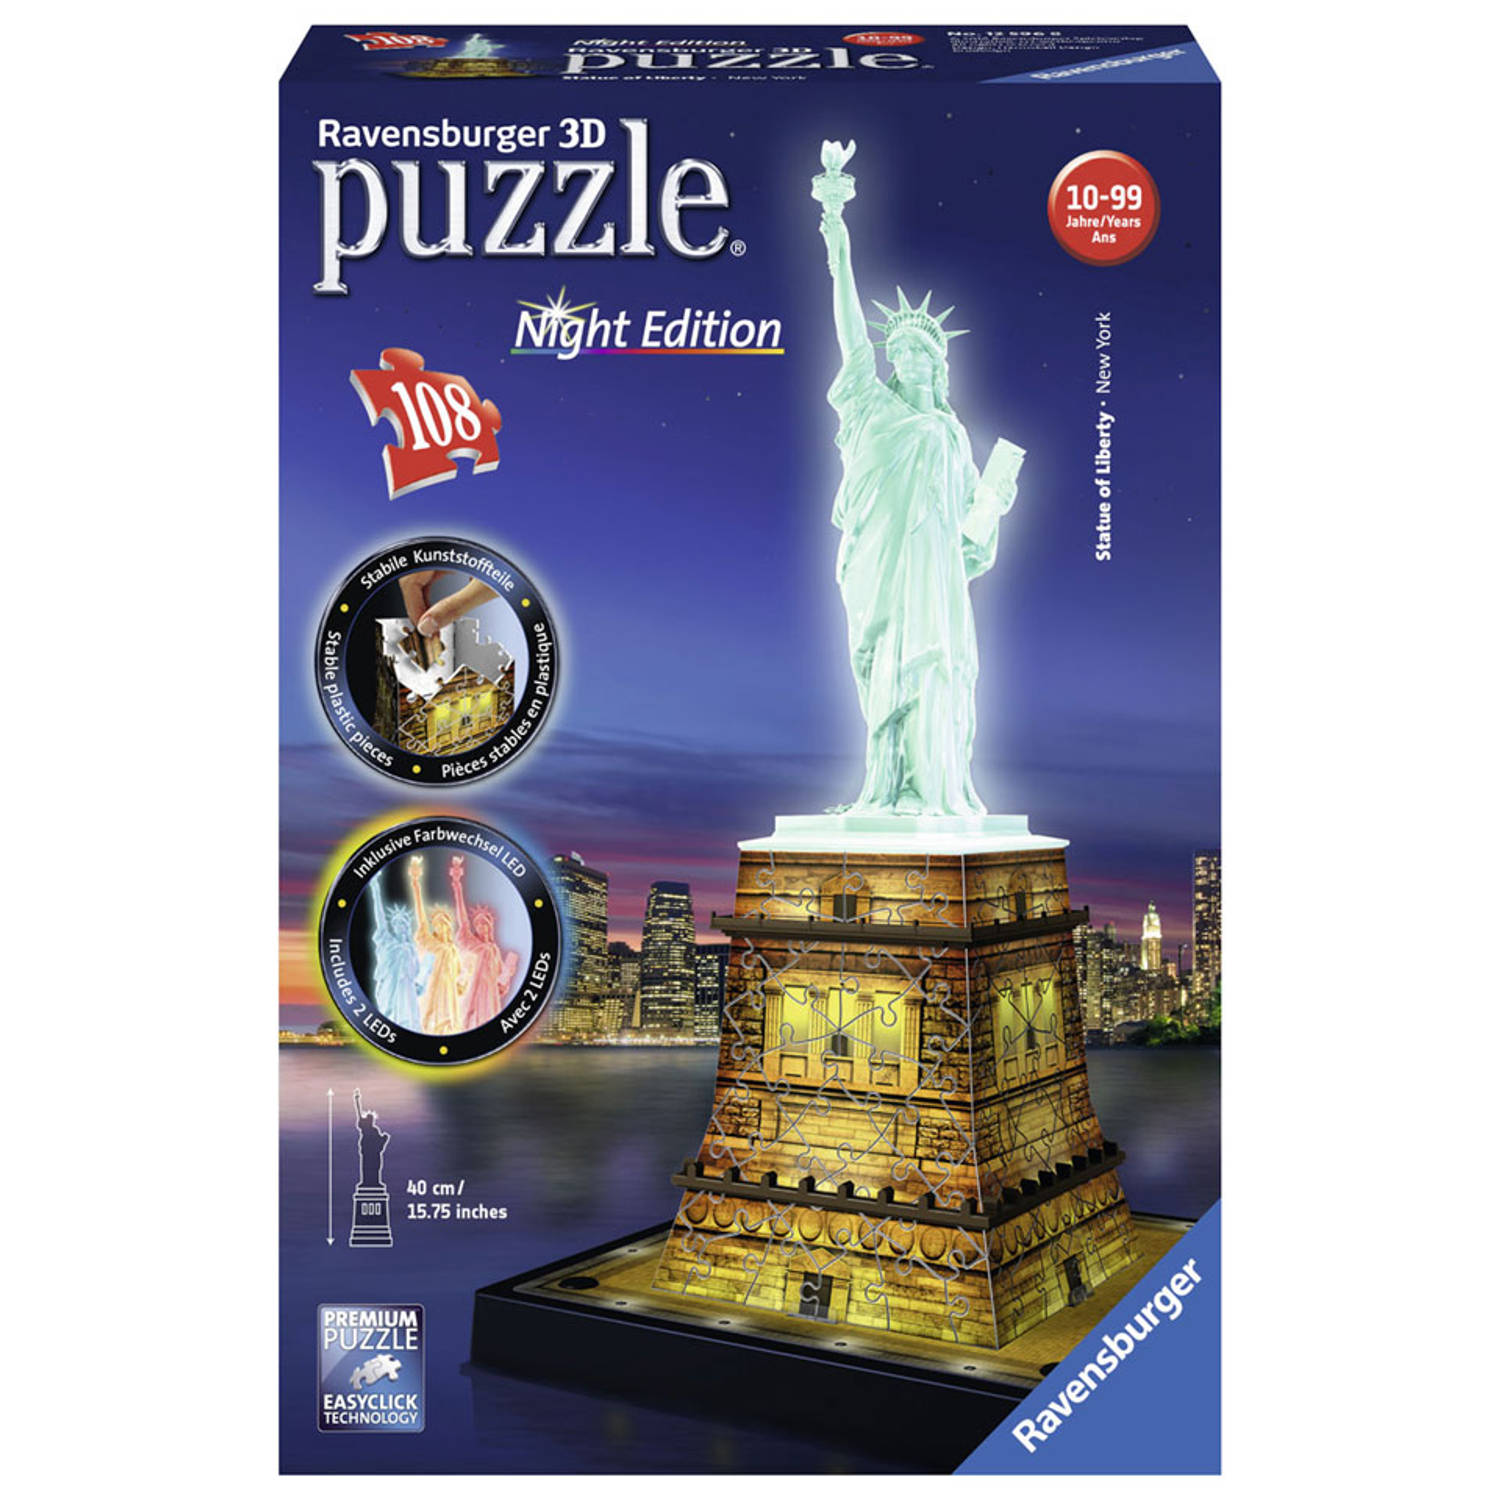 Ravensburger Statue of Liberty 3D puzzel night edition 108 stukjes